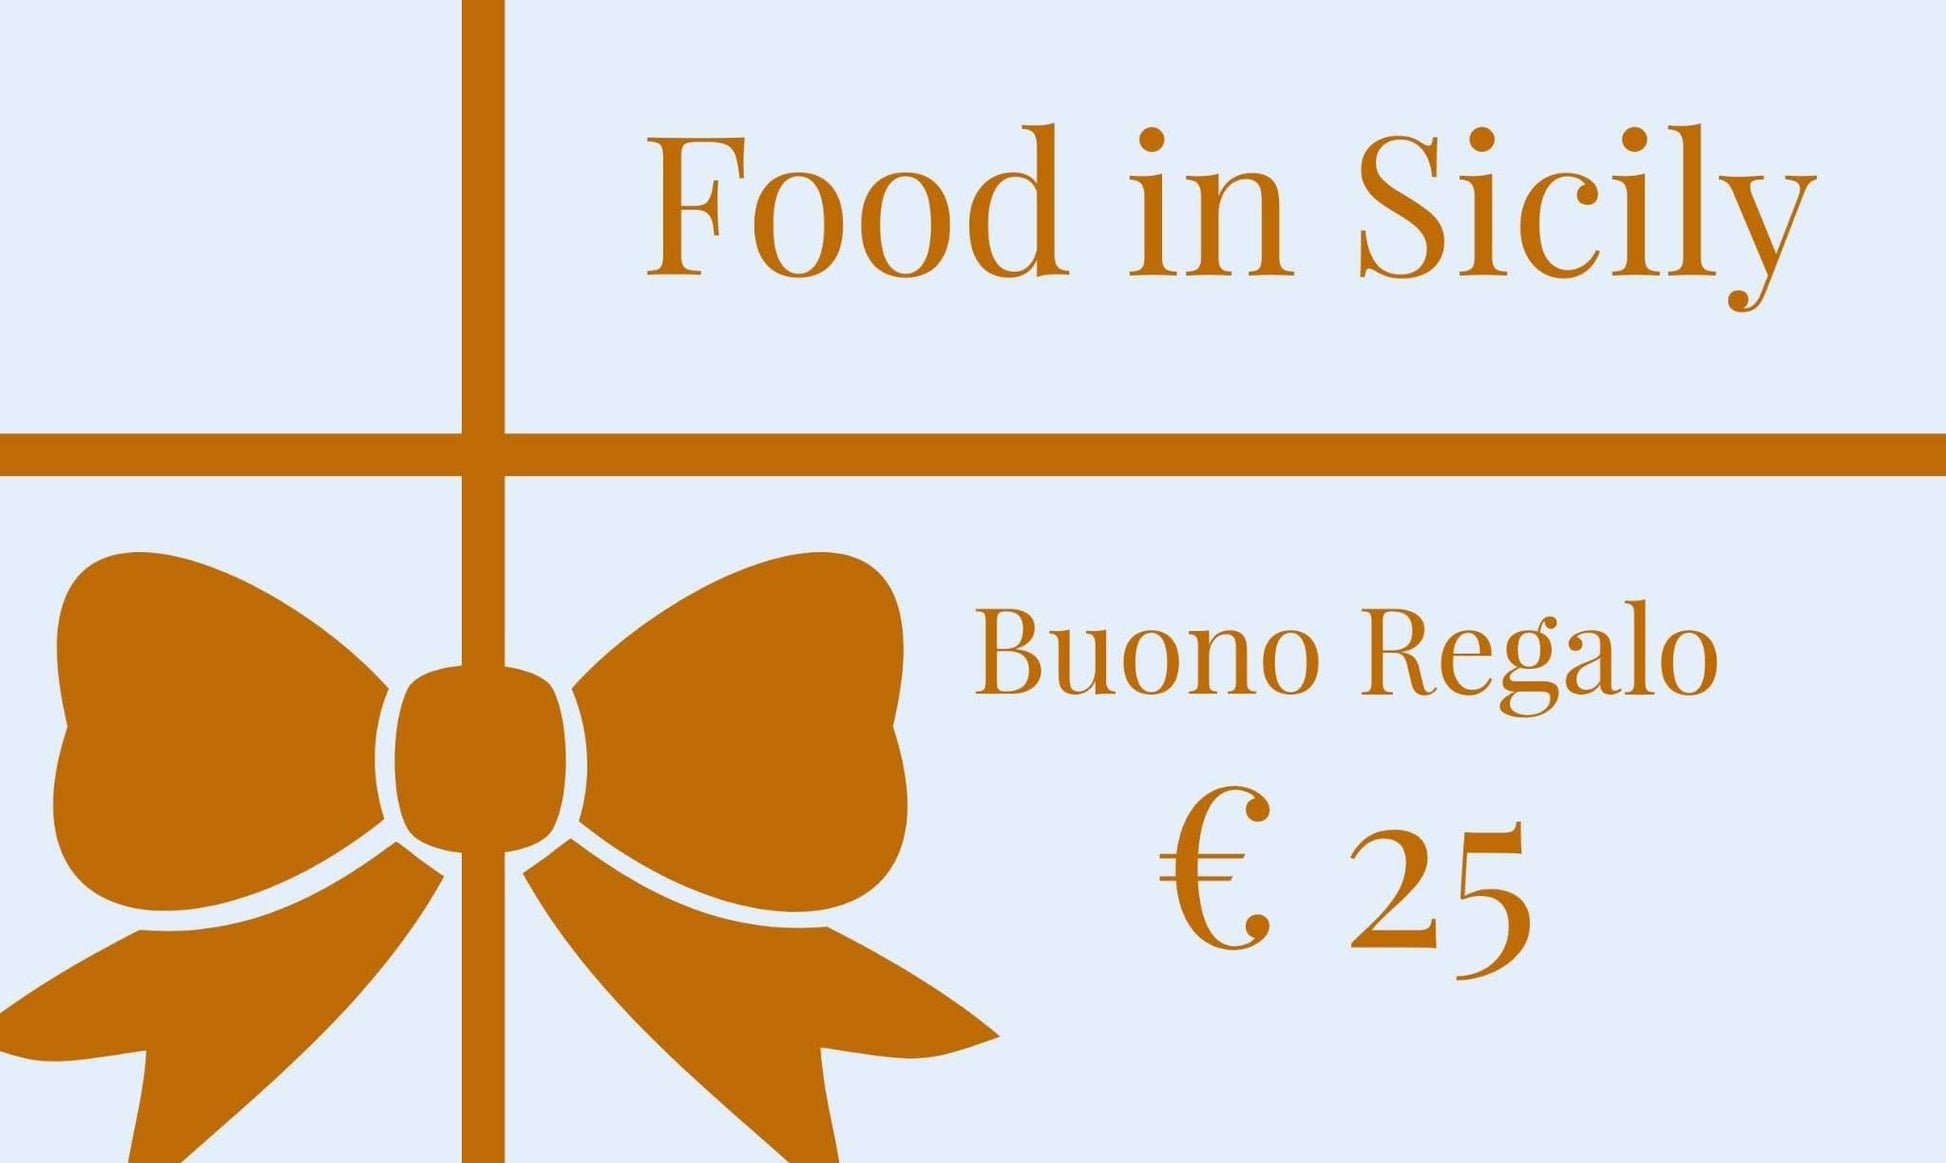 Buono Regalo Food in Sicily Buono Regalo Food in Sicily 25,00 € 